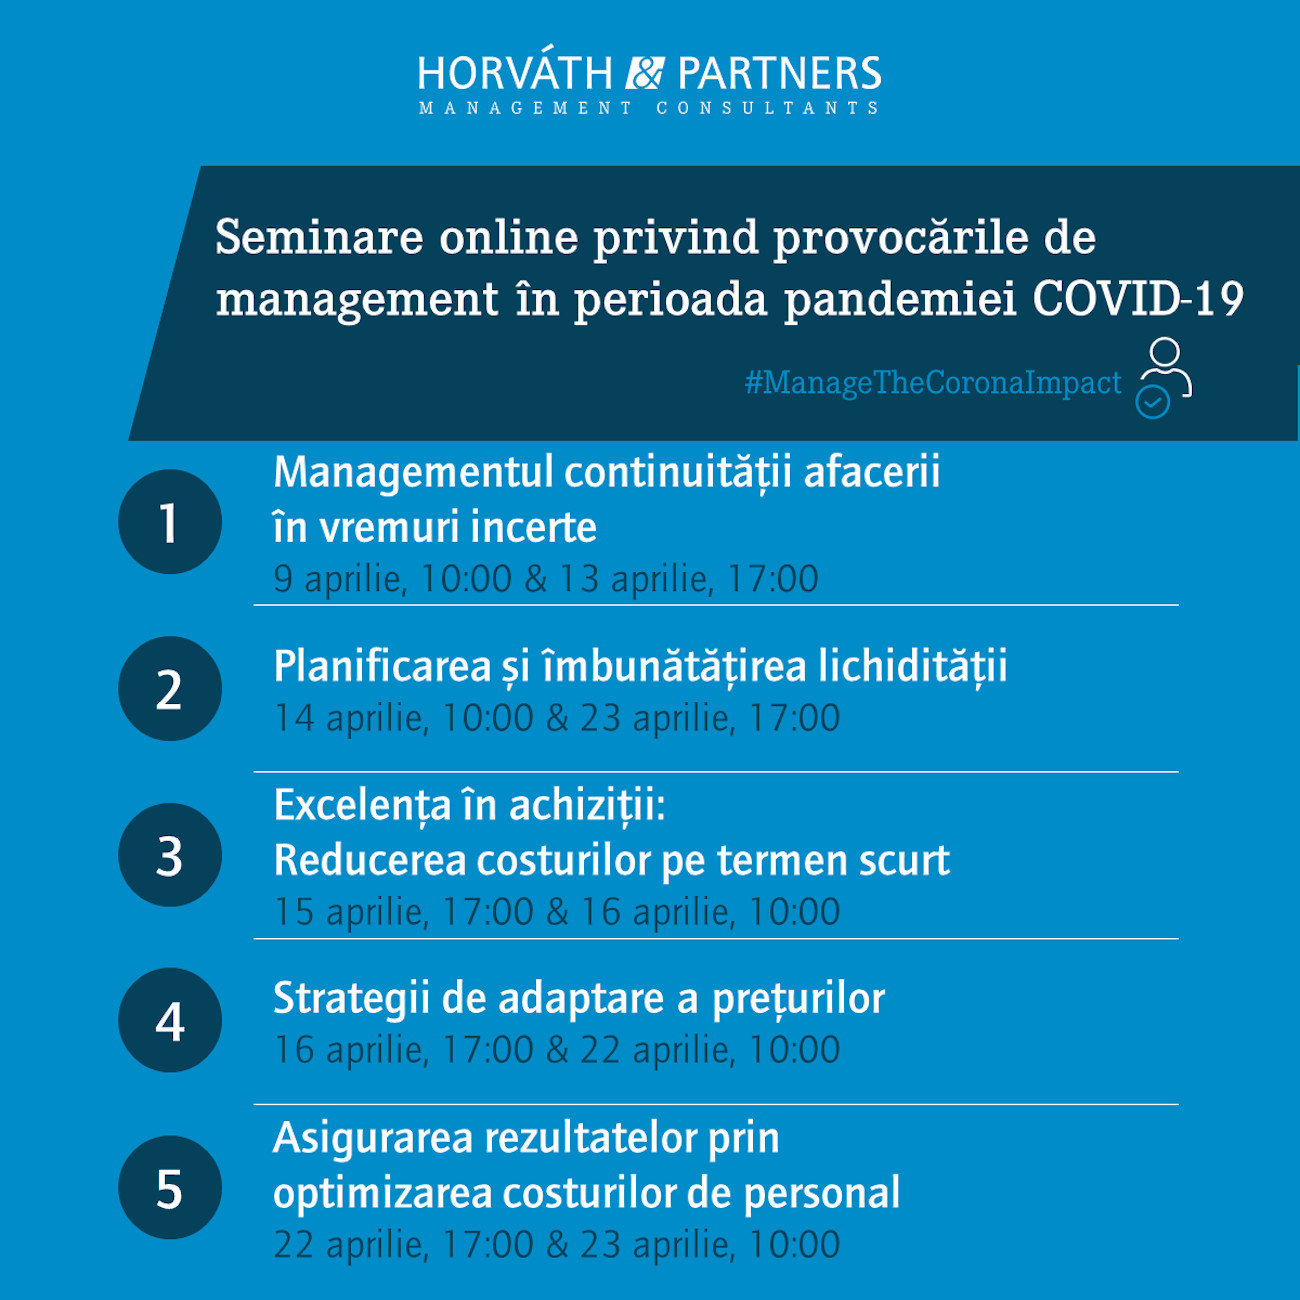 Programul seminarelor online Horvath & Partners